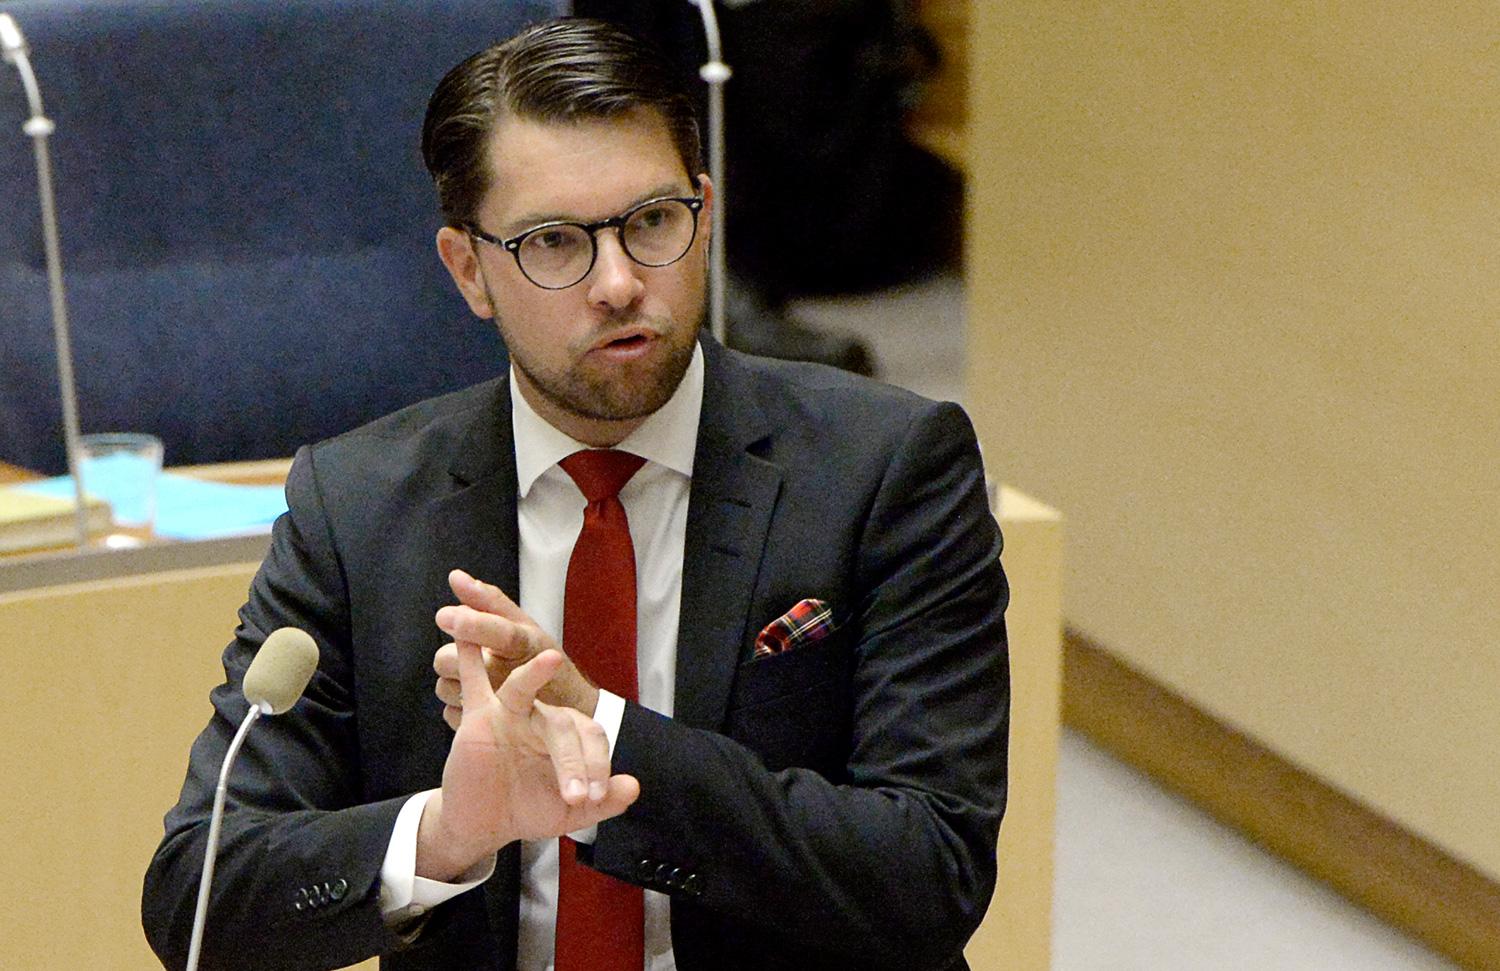 SD-ledaren Jimmie Åkesson fördömer brandattackerna mot flyktingboenden.